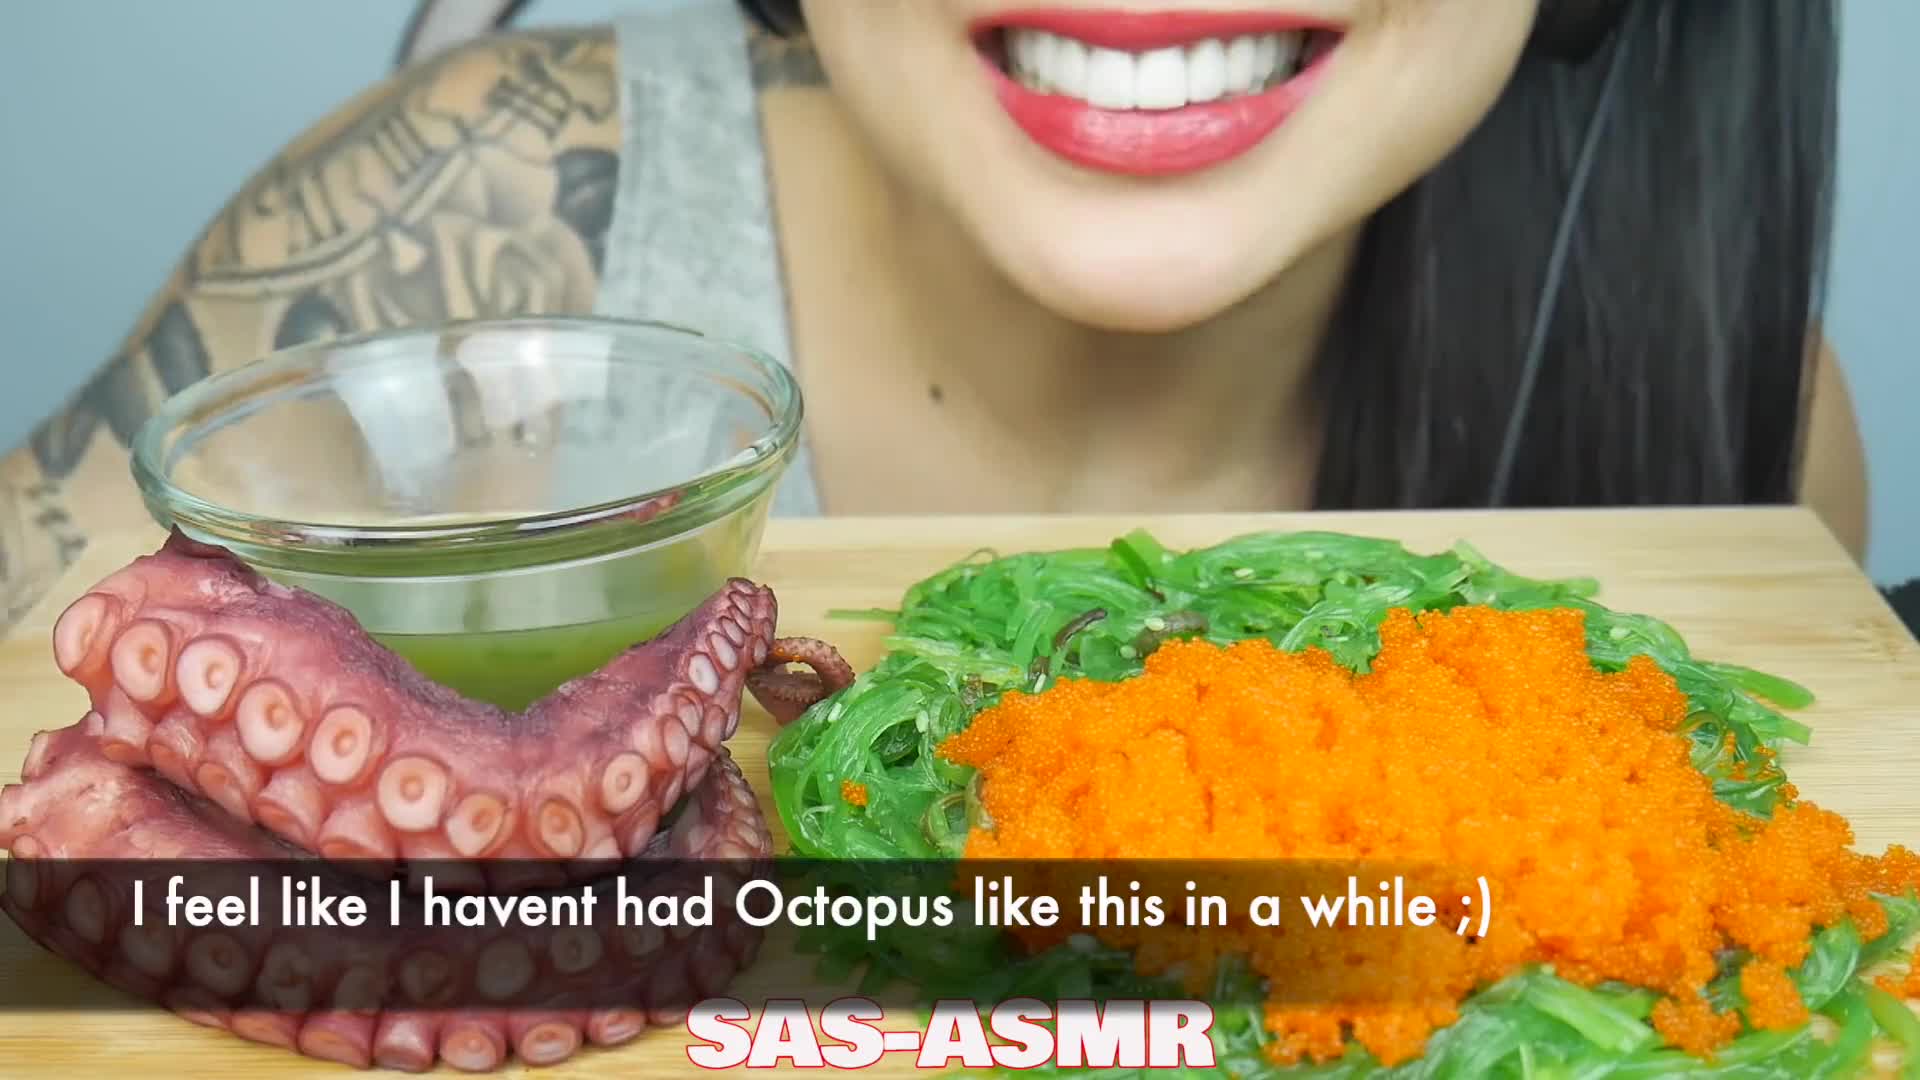 Octopus! Seaweed salad, flying fish seed www~better with headphones!